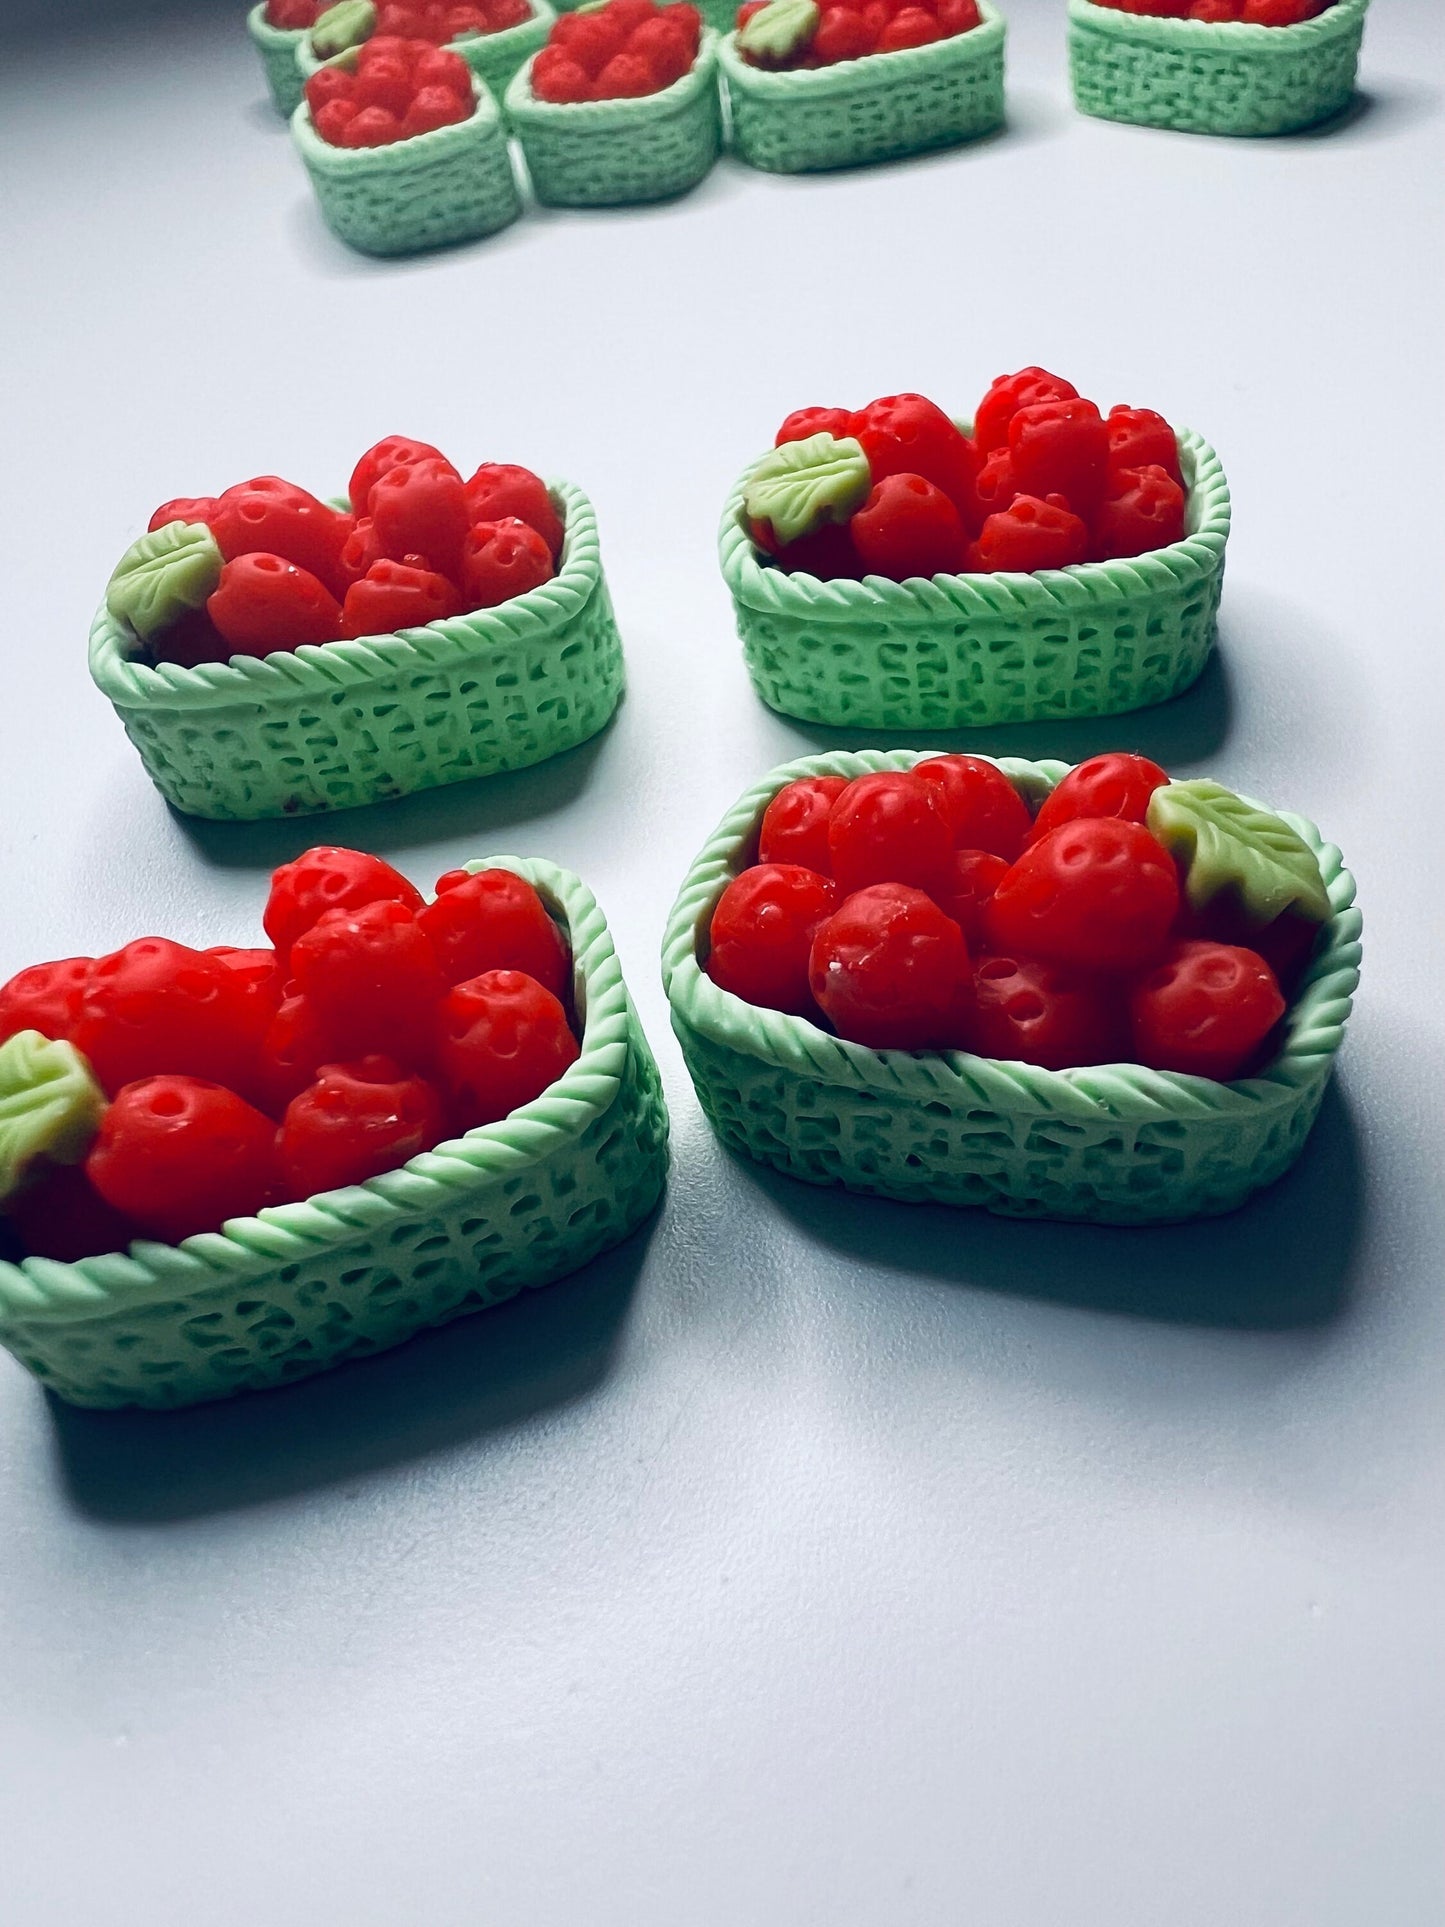 Miniature Raspberry Basket  Fruit Trinkets - Mini Objects Speech Montessori - Mini Raspberry Trinket - Fruit Miniature Objects for Dollhouse